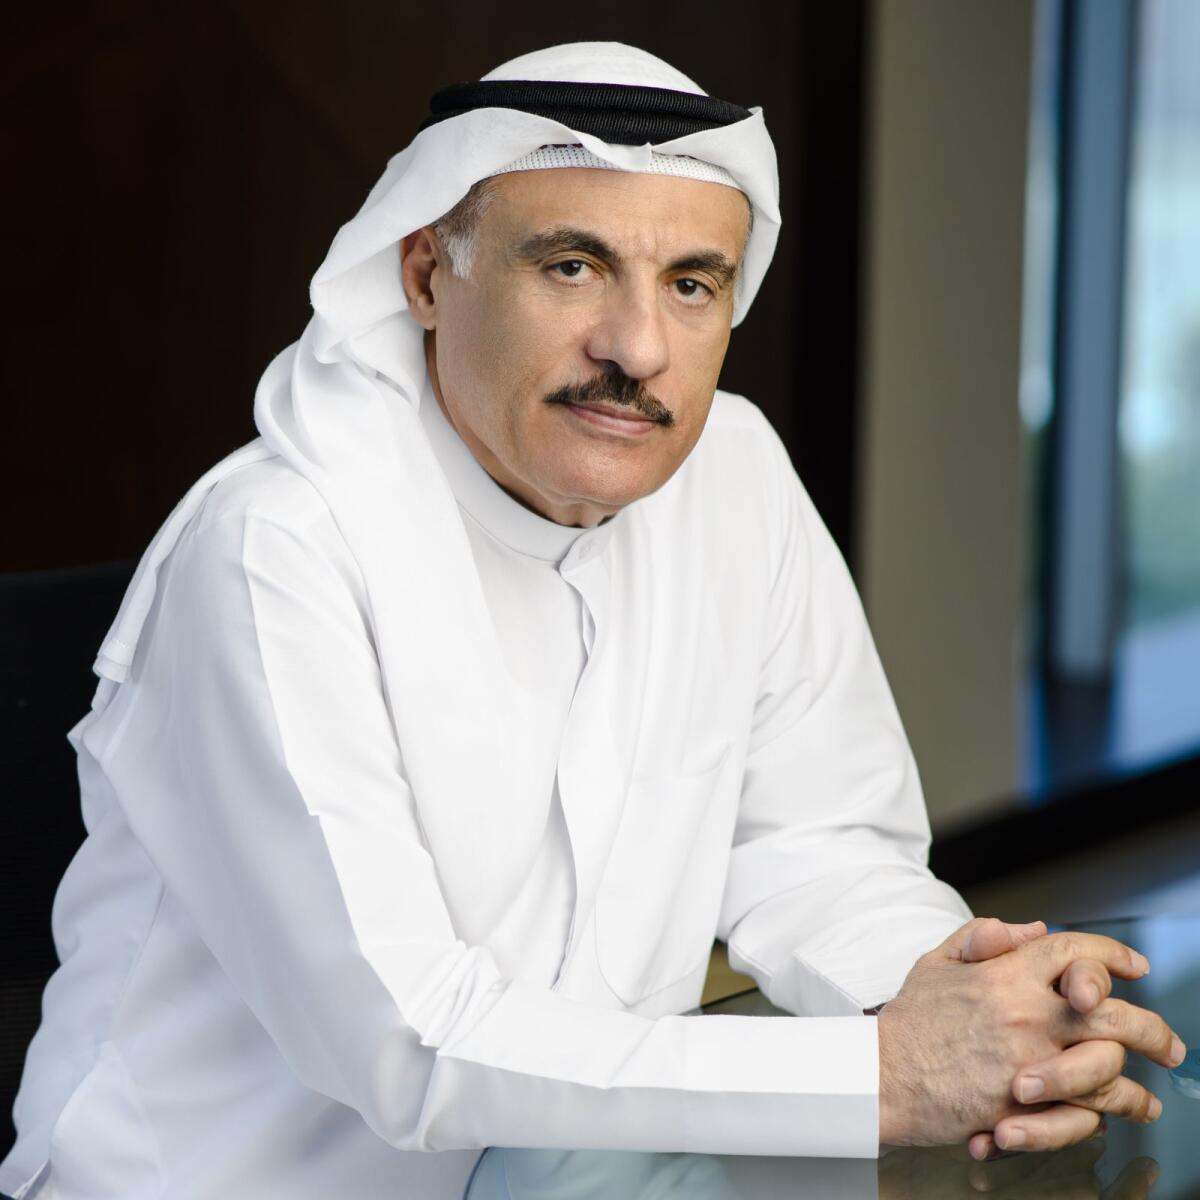 Mohammad Ali Al Ansari, Chairman of Al Ansari Financial Services